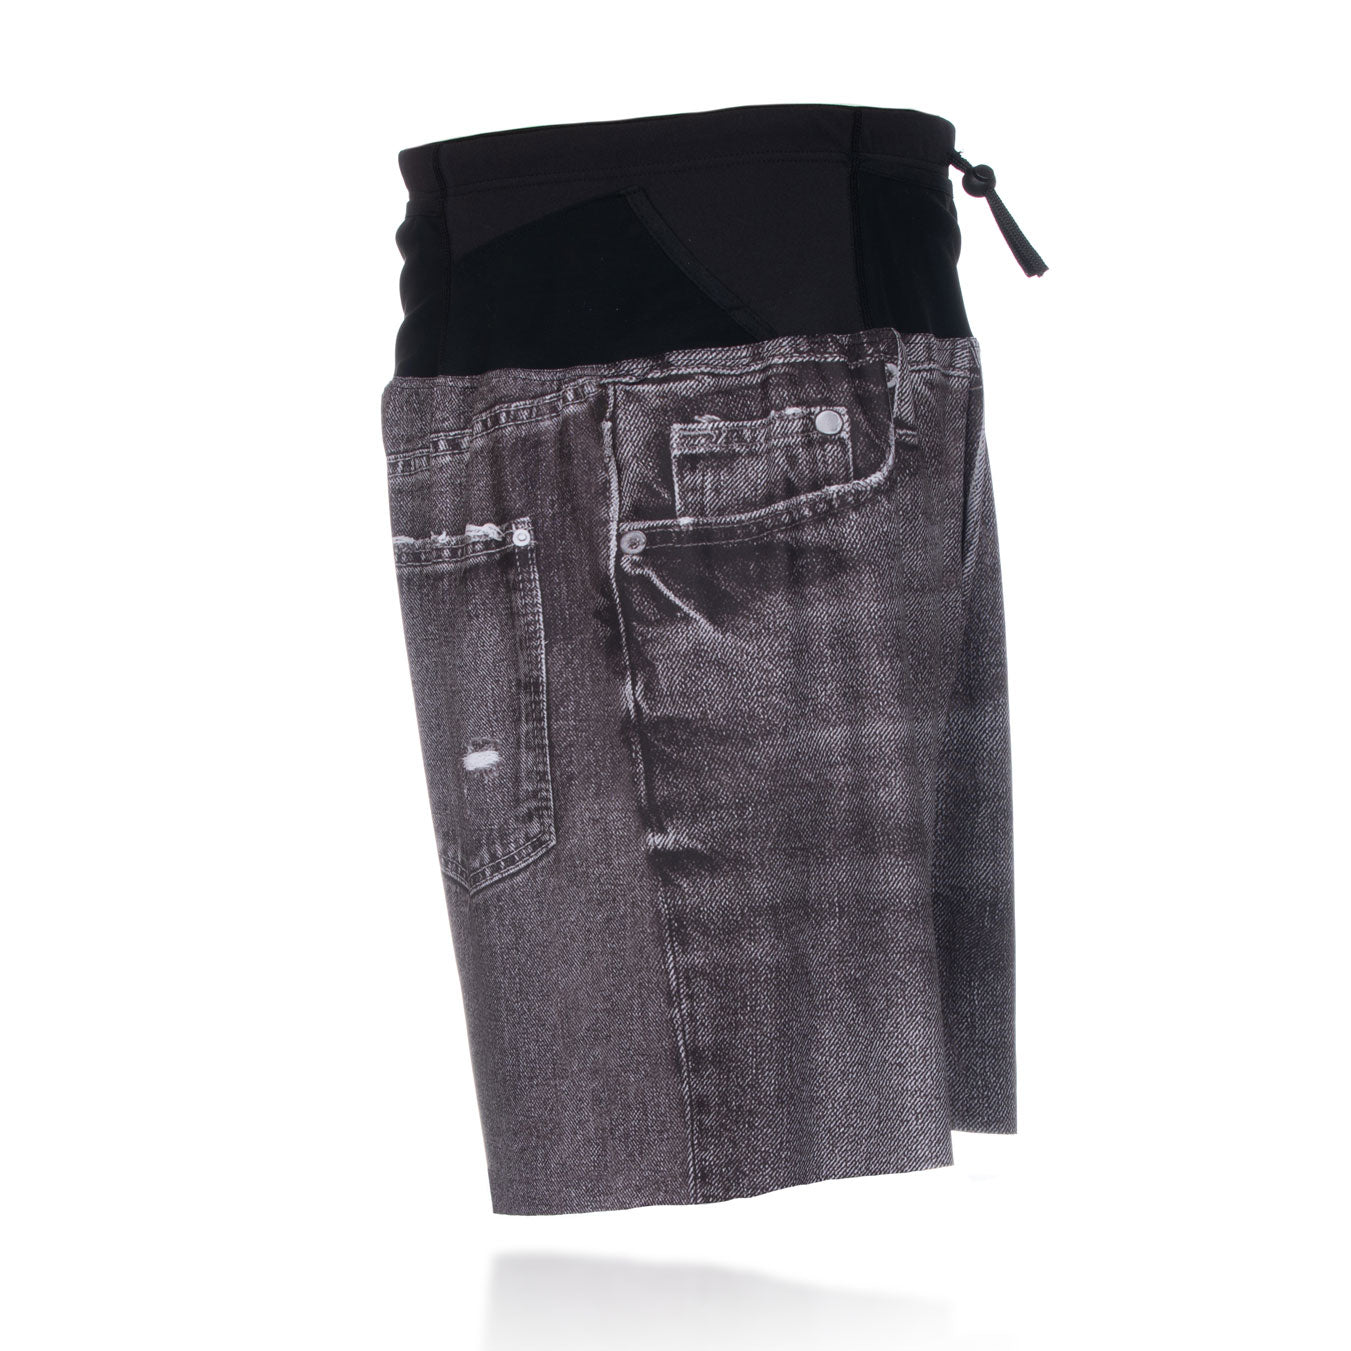 Shorts - Black Jeans